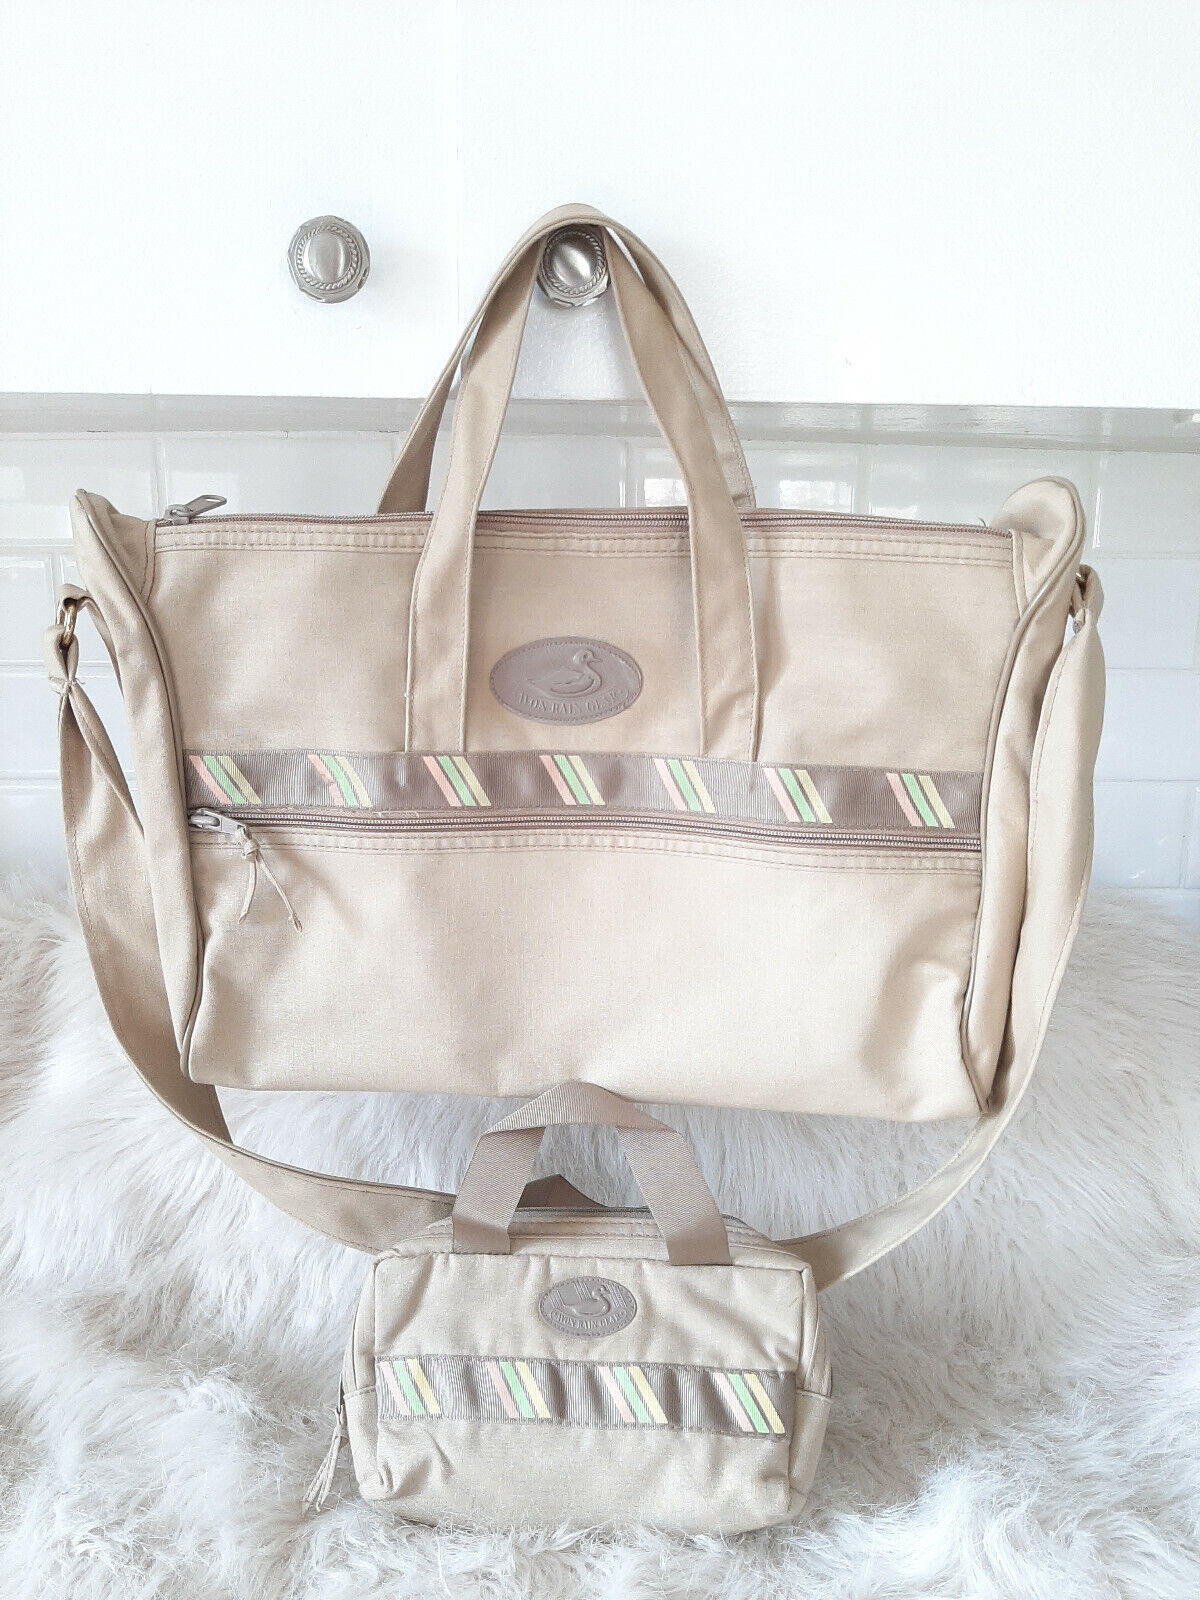 Vintage Avon Rain Gear Beige Canvas Cream White Travel Bag and Cosmetic Bag Set